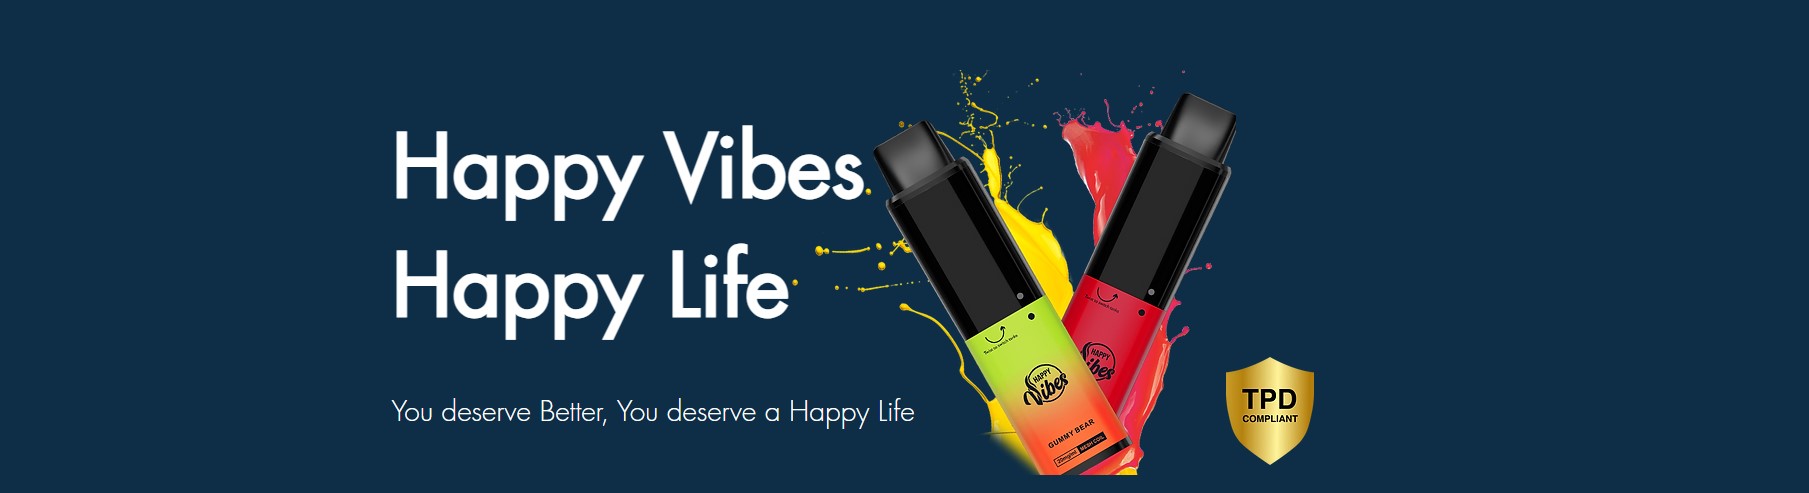 happy-vibes-banner